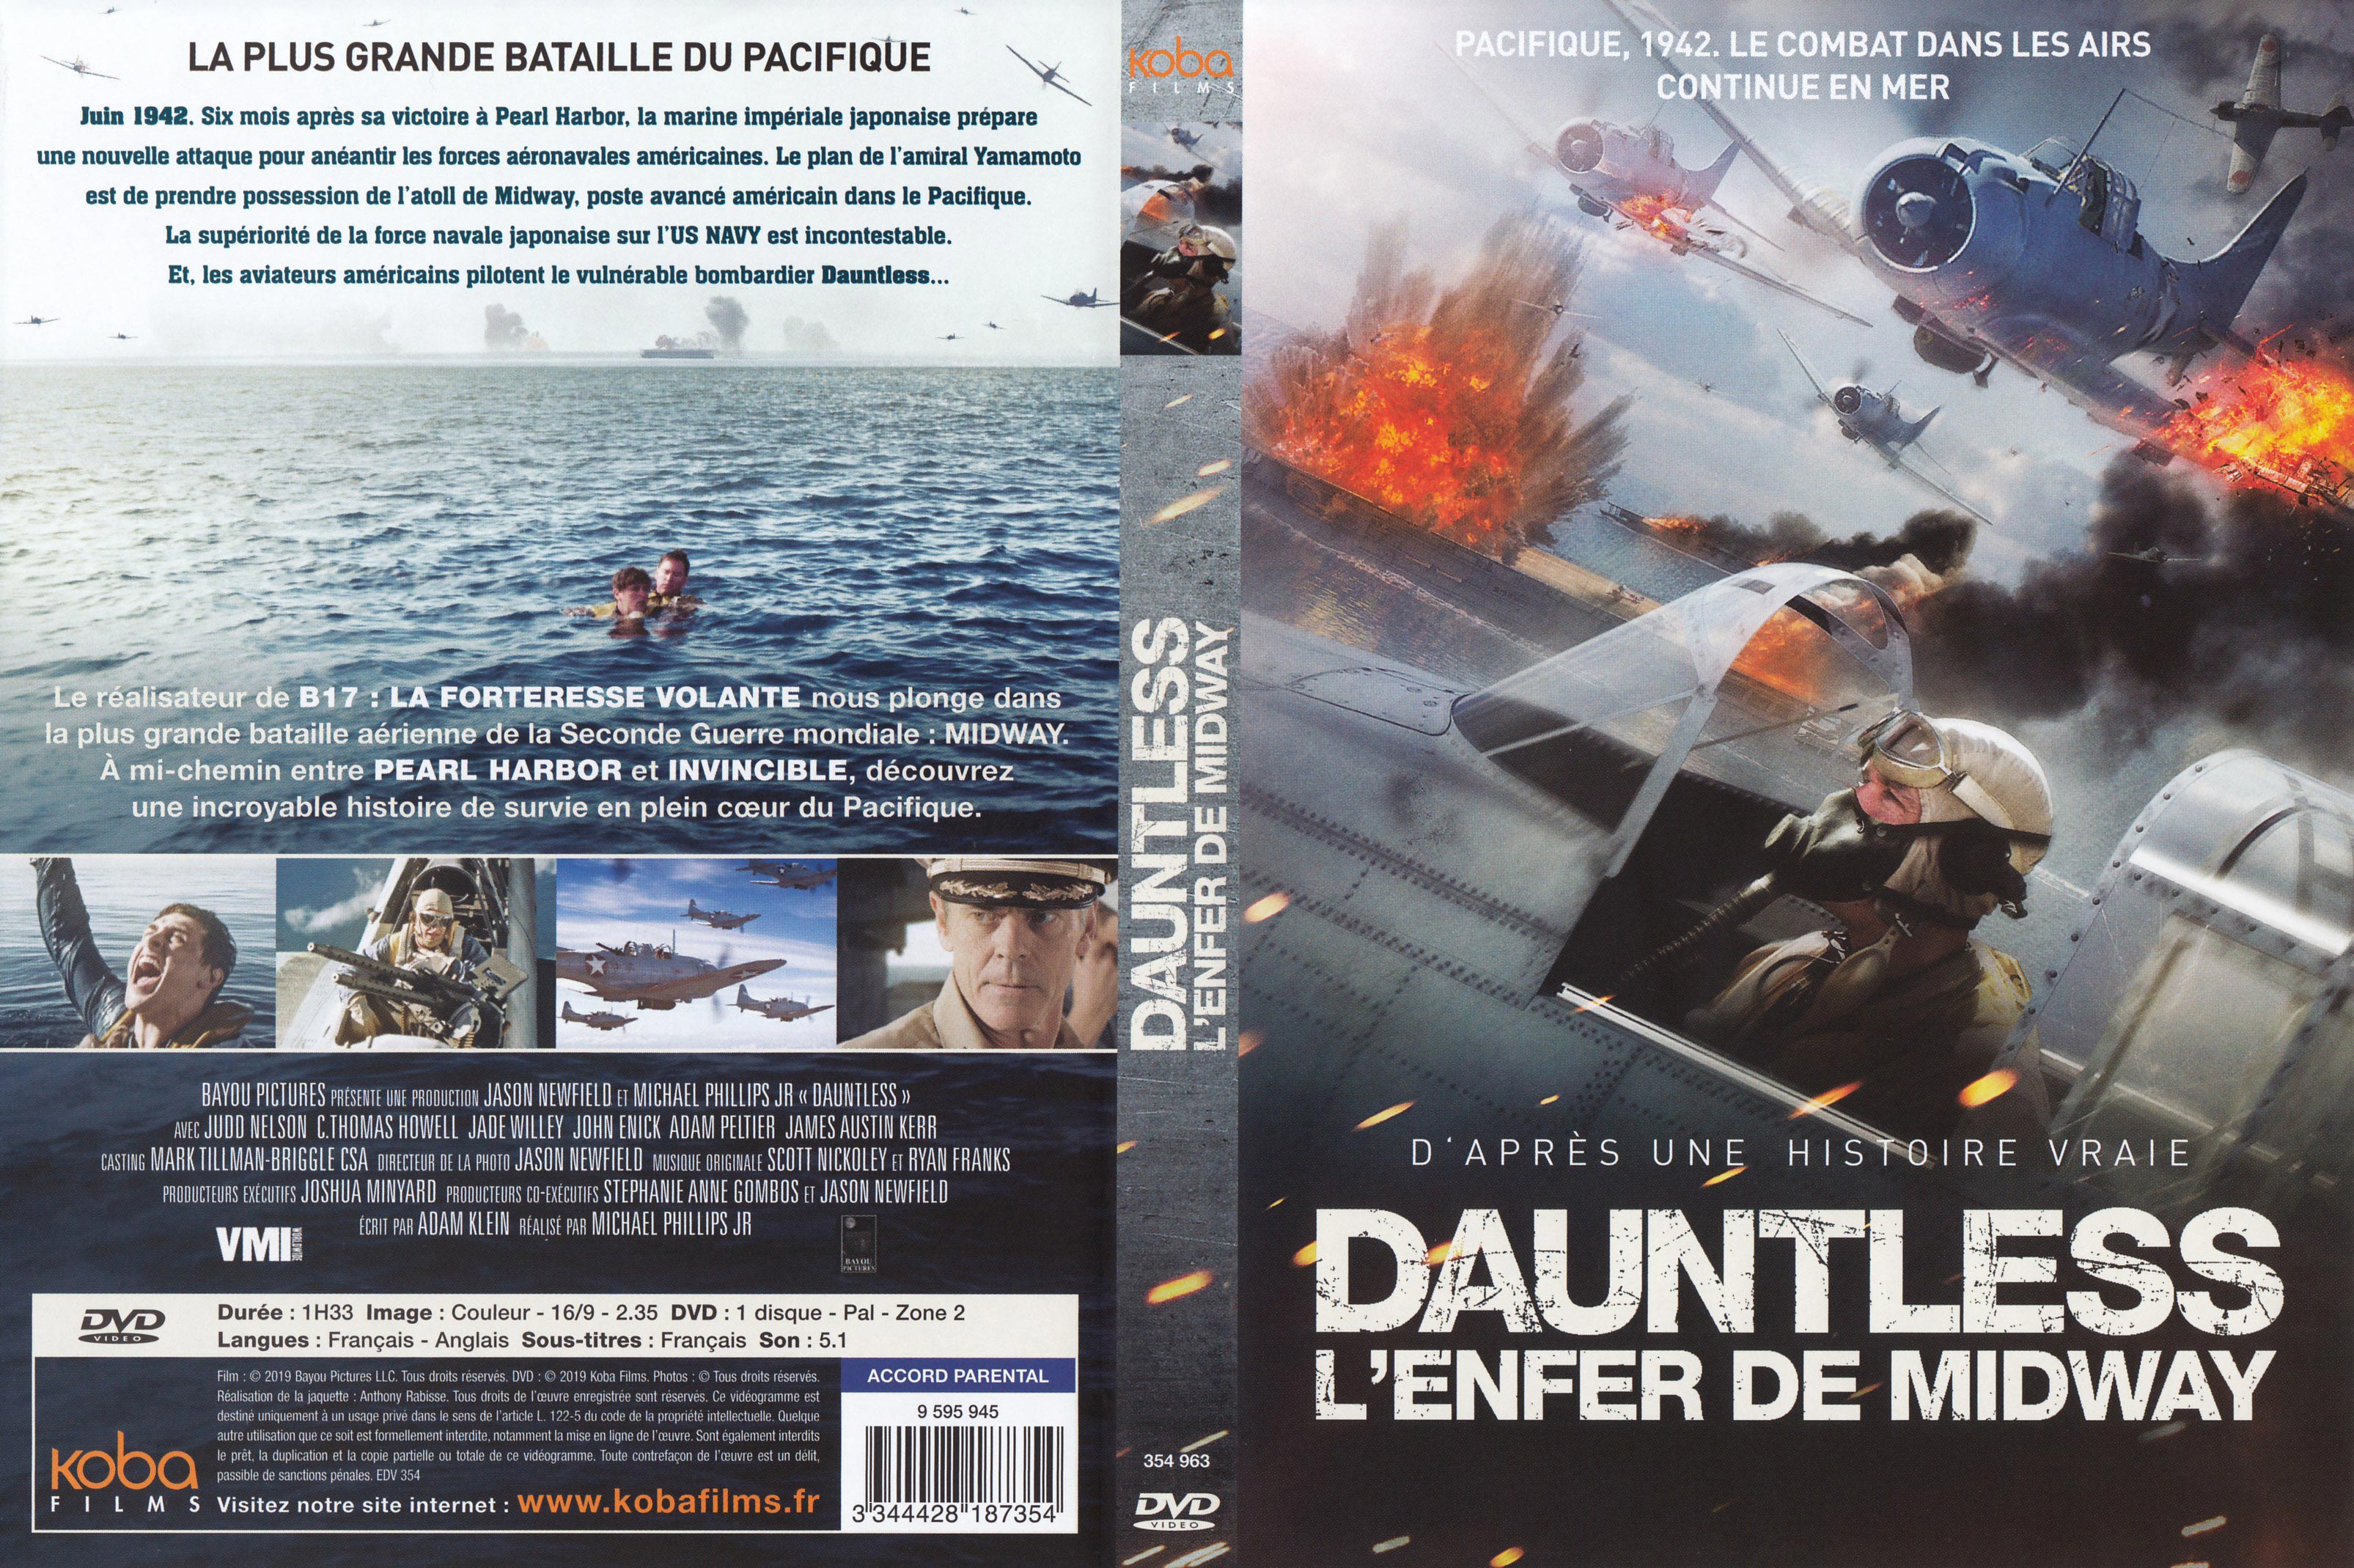 Jaquette DVD Dauntless l